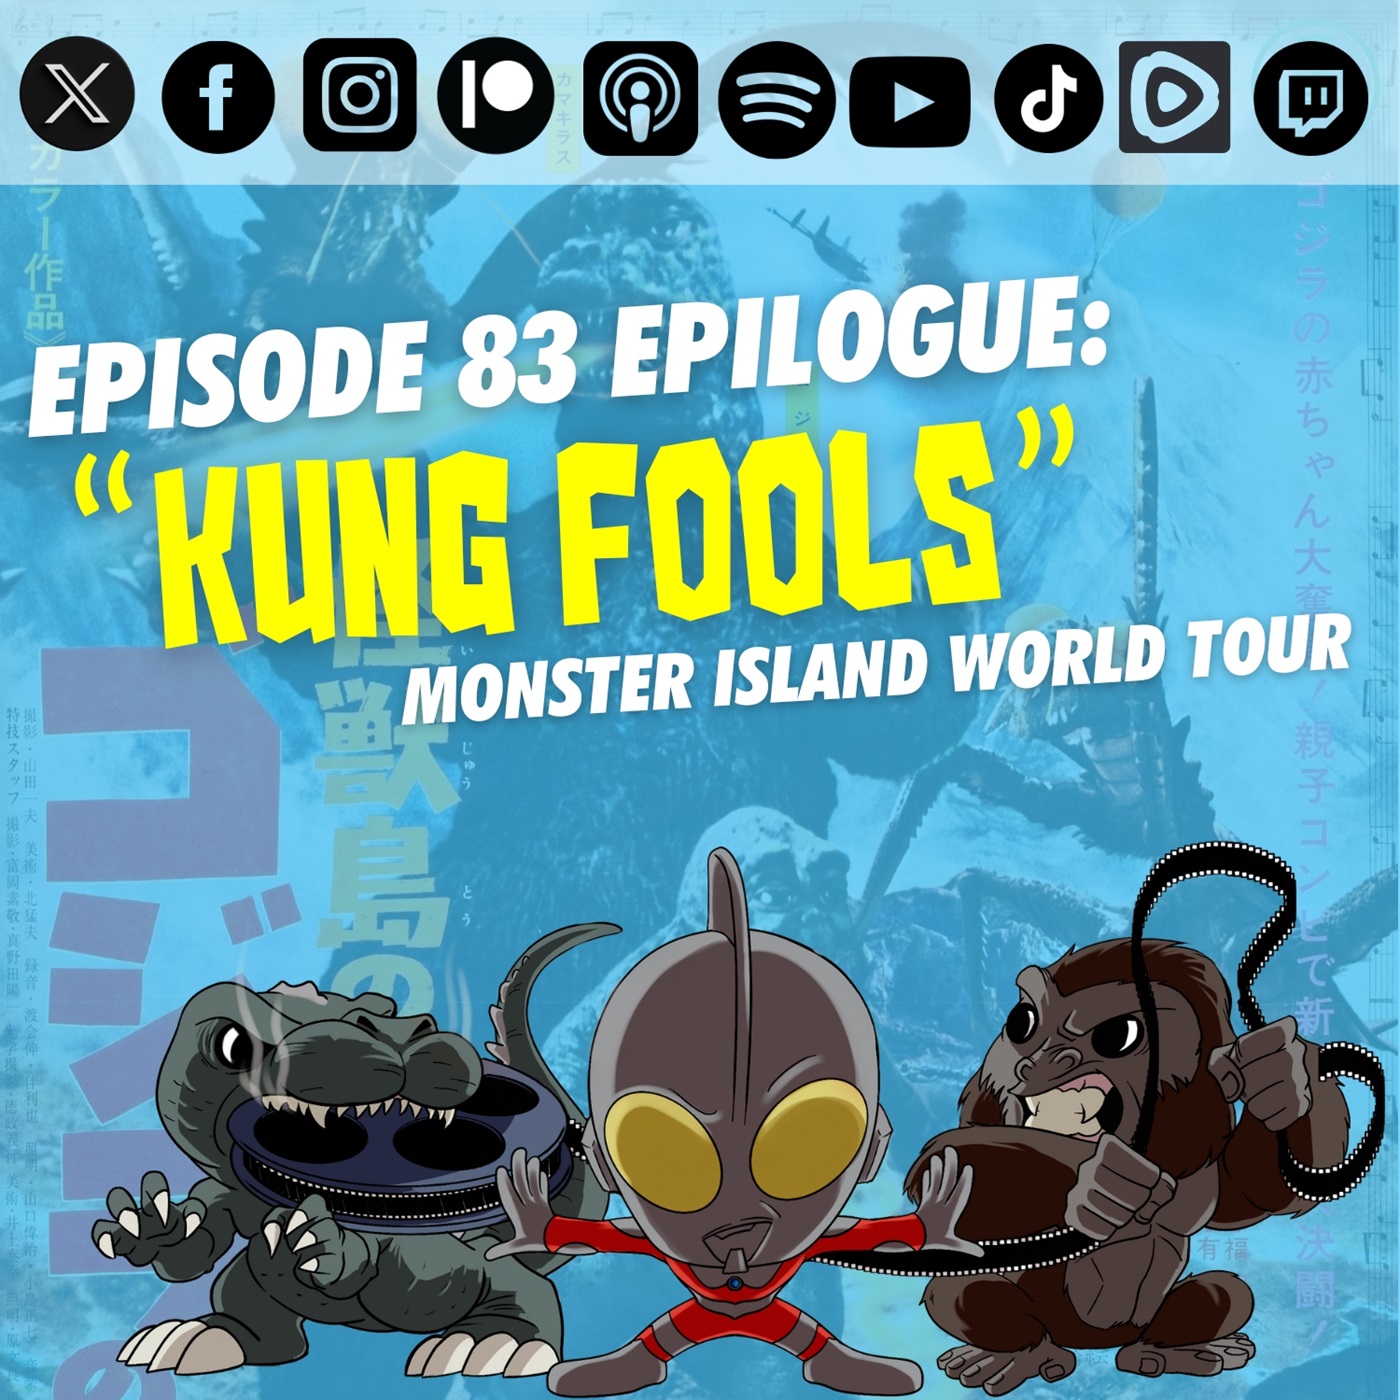 Episode 83 Epilogue: “Kung Fools”